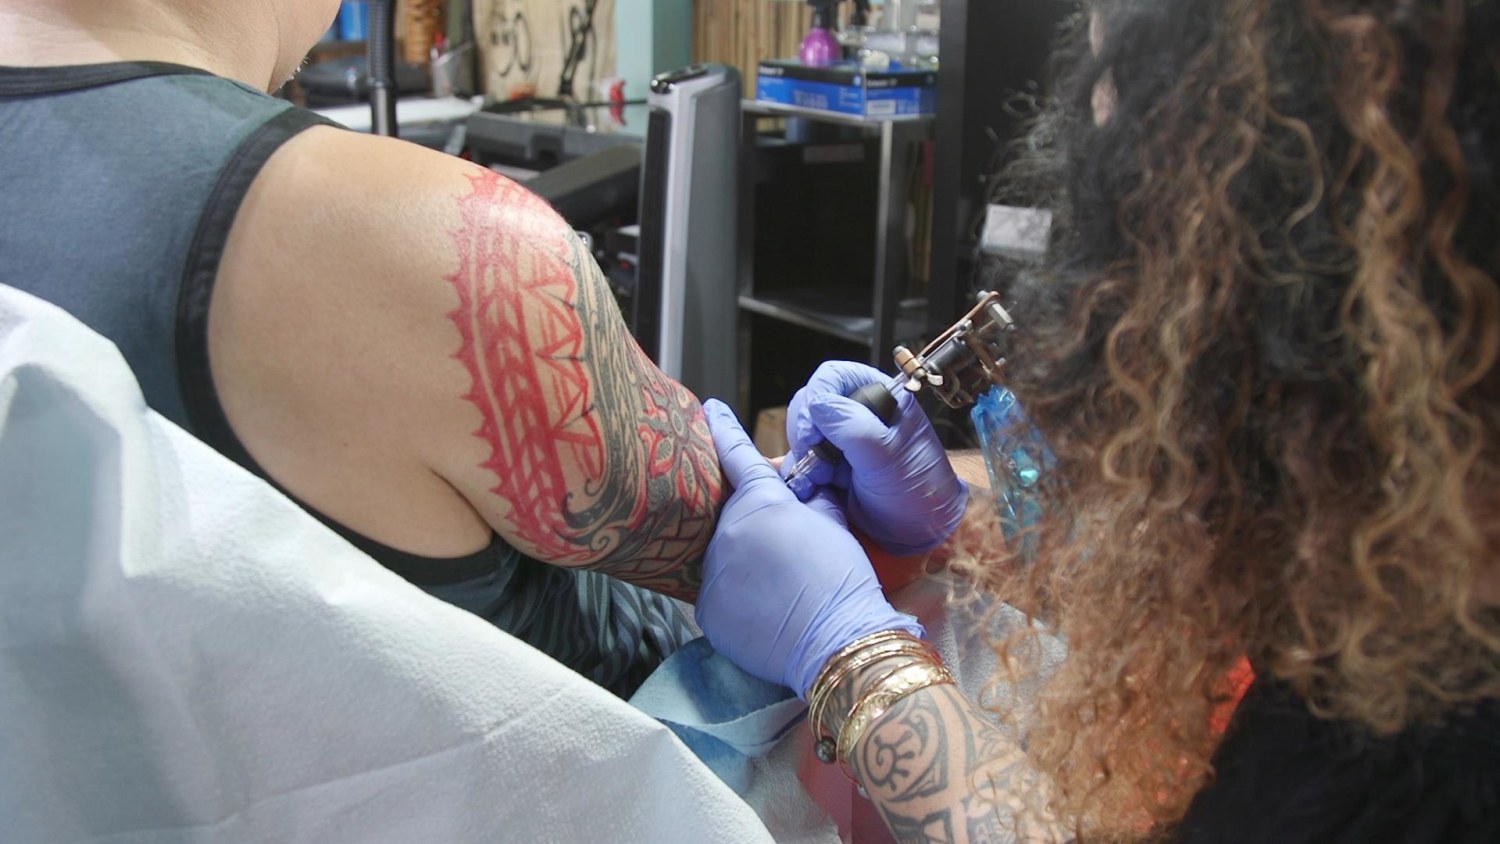 Turning trauma into art Brazilian tattoo artist gives women reason to  smile  Reuters